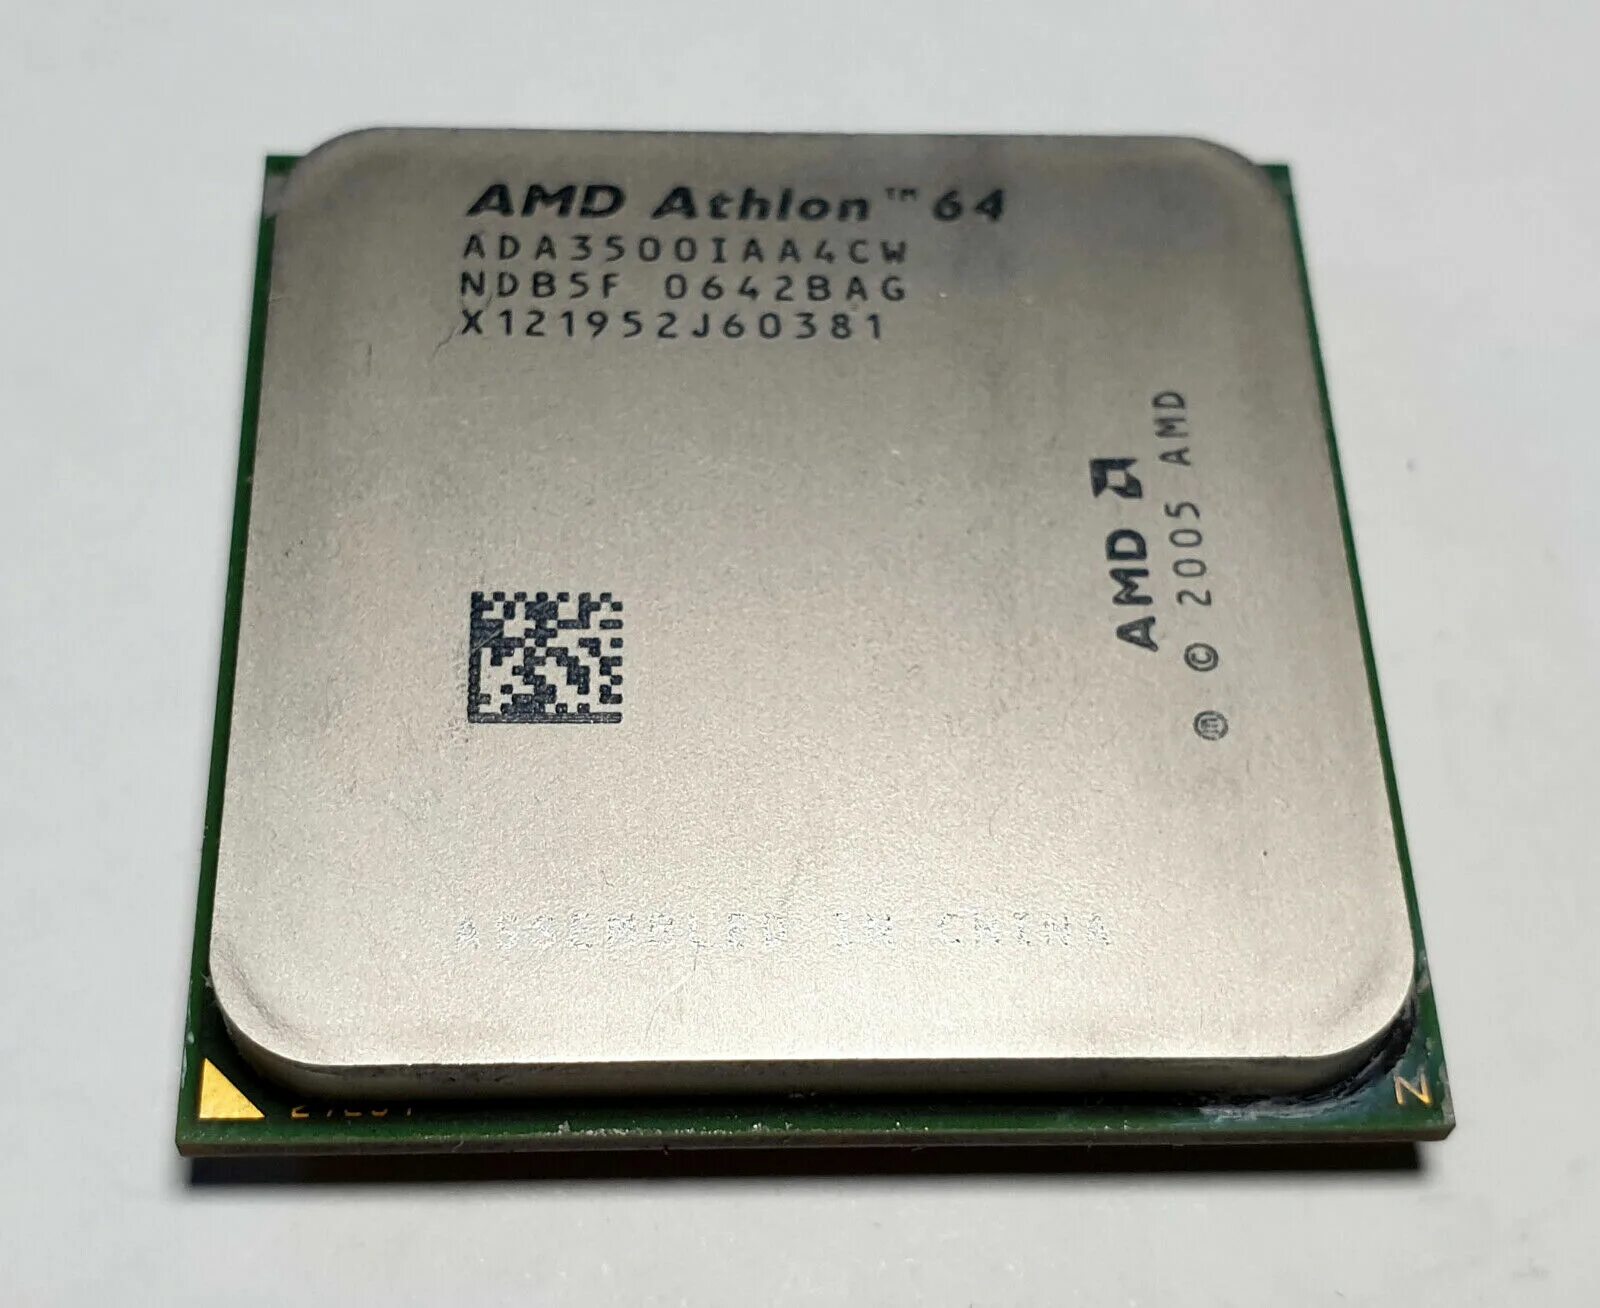 Athlon 64 купить. Athlon 64 3500+. AMD Athlon 64 ada3500iaa4cn lebaf. AMD Athlon 64 3500. AMD Athlon 64 Processor 3500+.